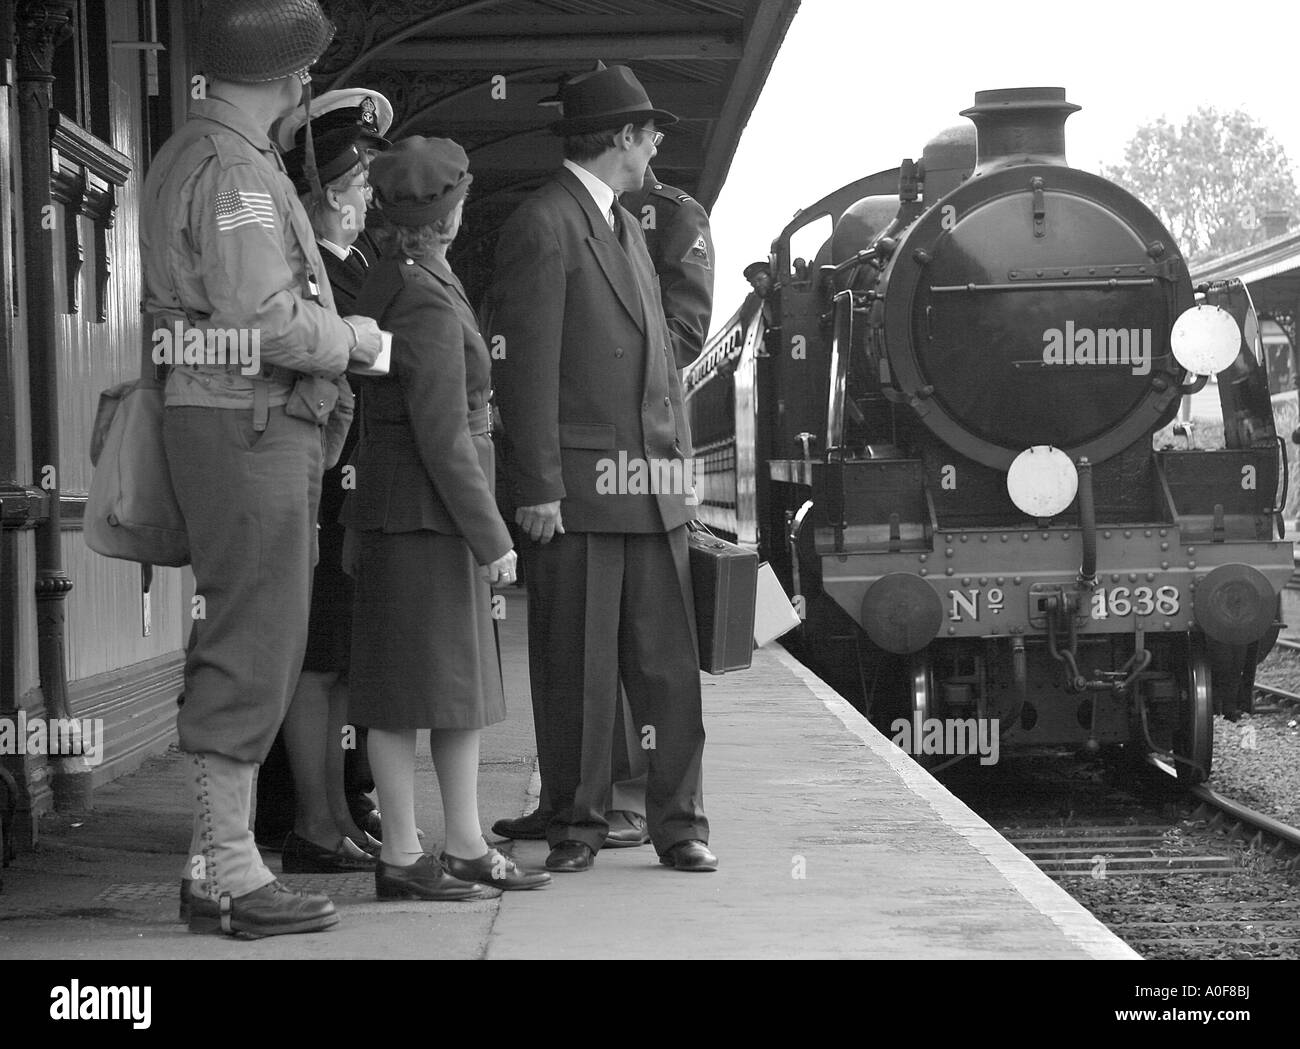 Steam trains at war. Stock Photo